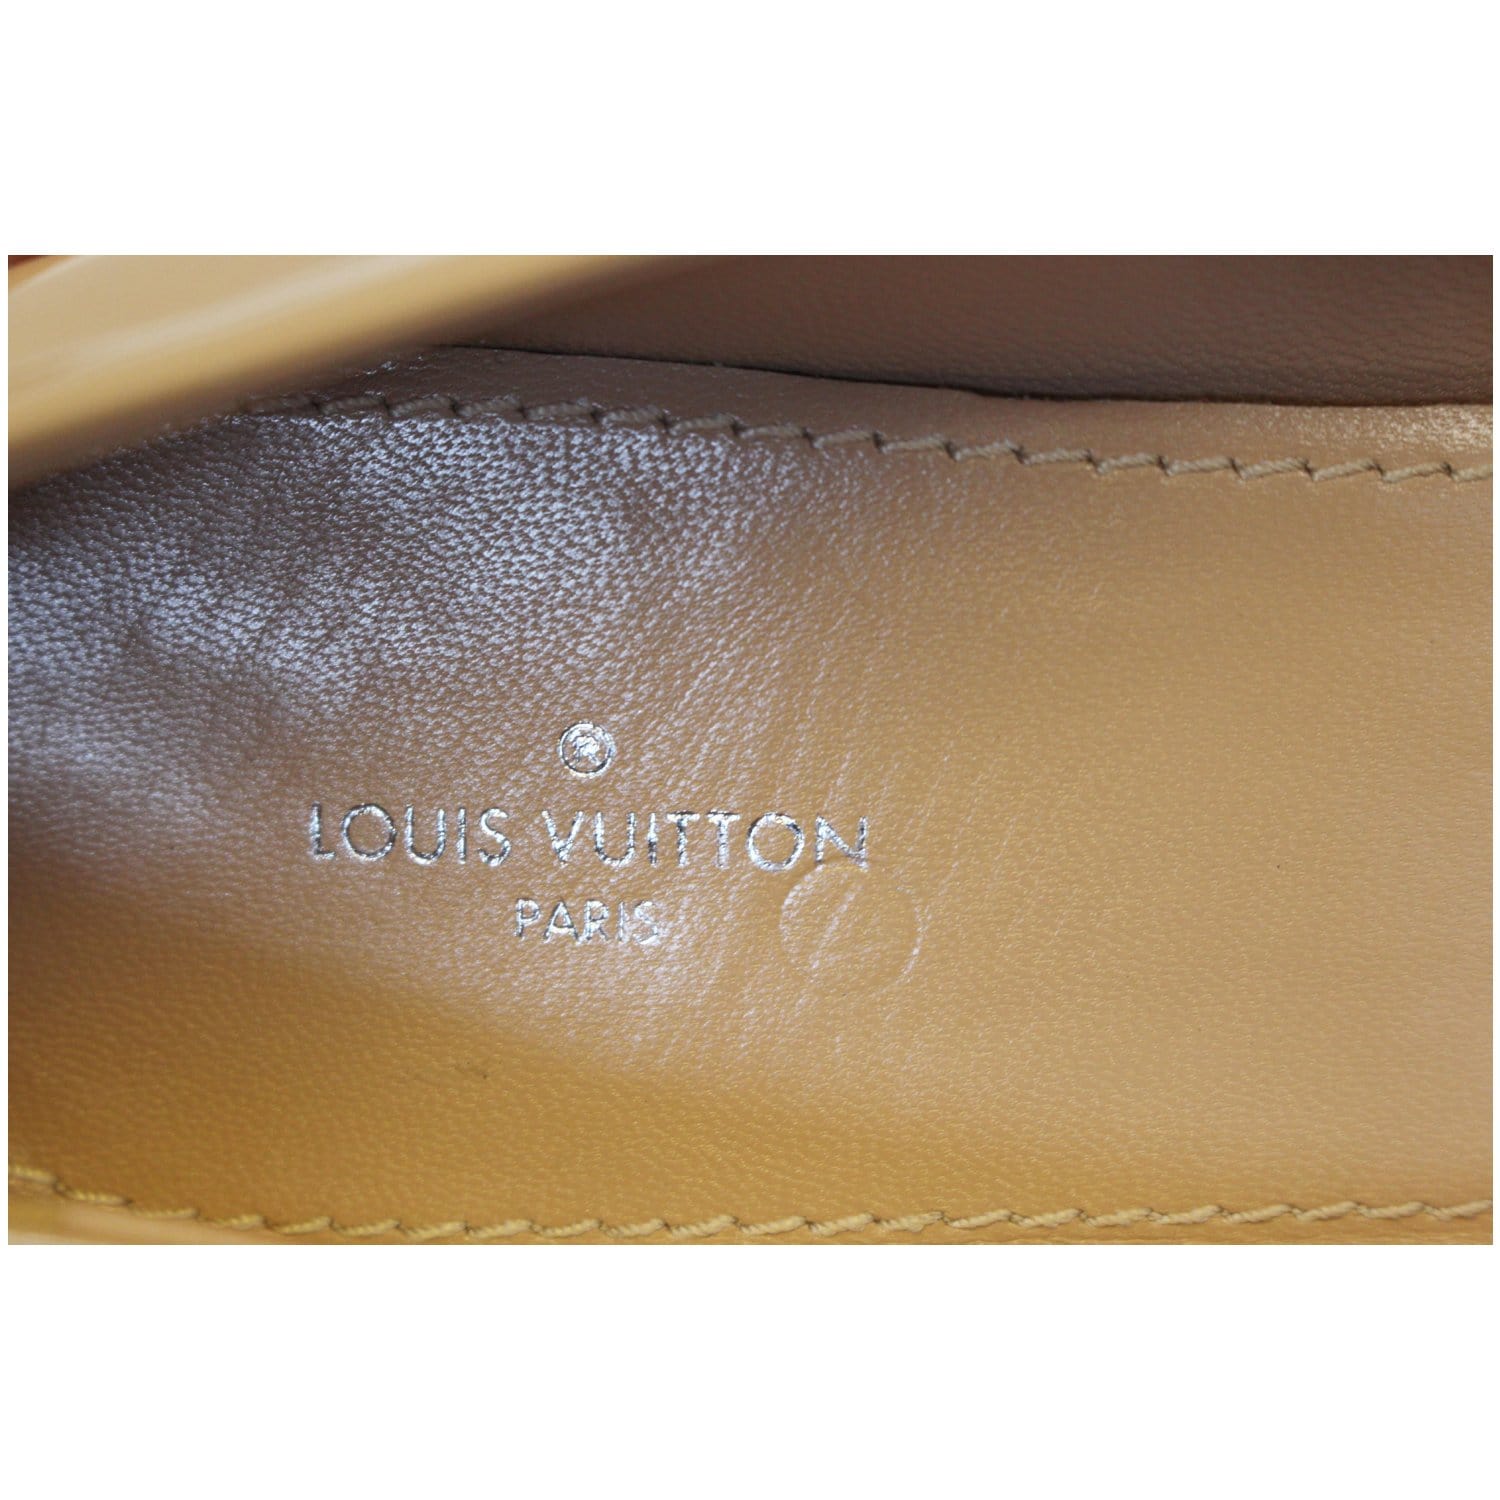 LOUIS VUITTON, shoes, Madeleine monogram pattern buckle in gold